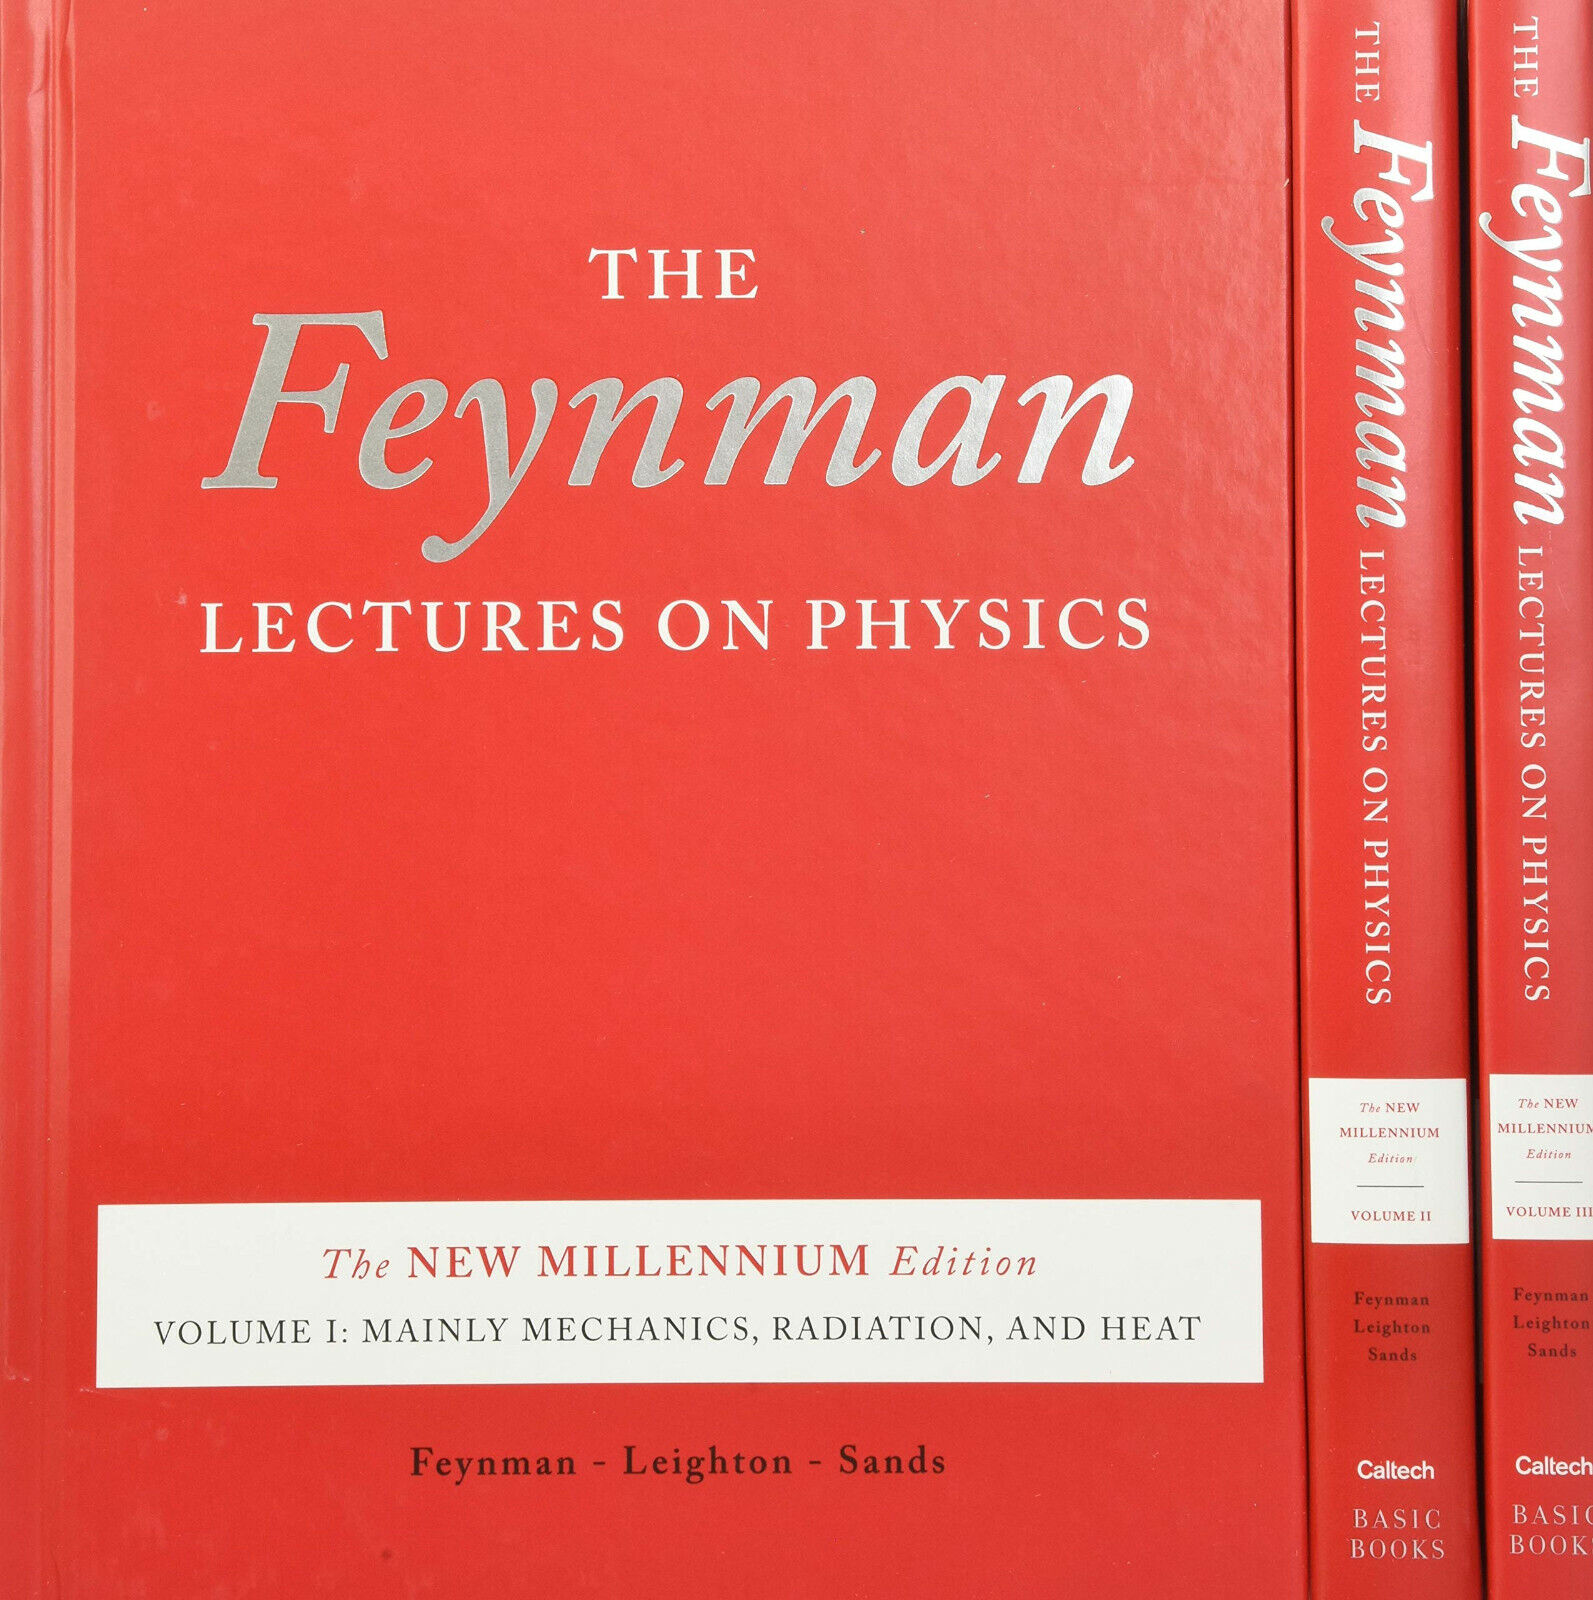 Feynman Lectures on Physics -  Richard P. Feynman, Robert B. Leighton - 2011